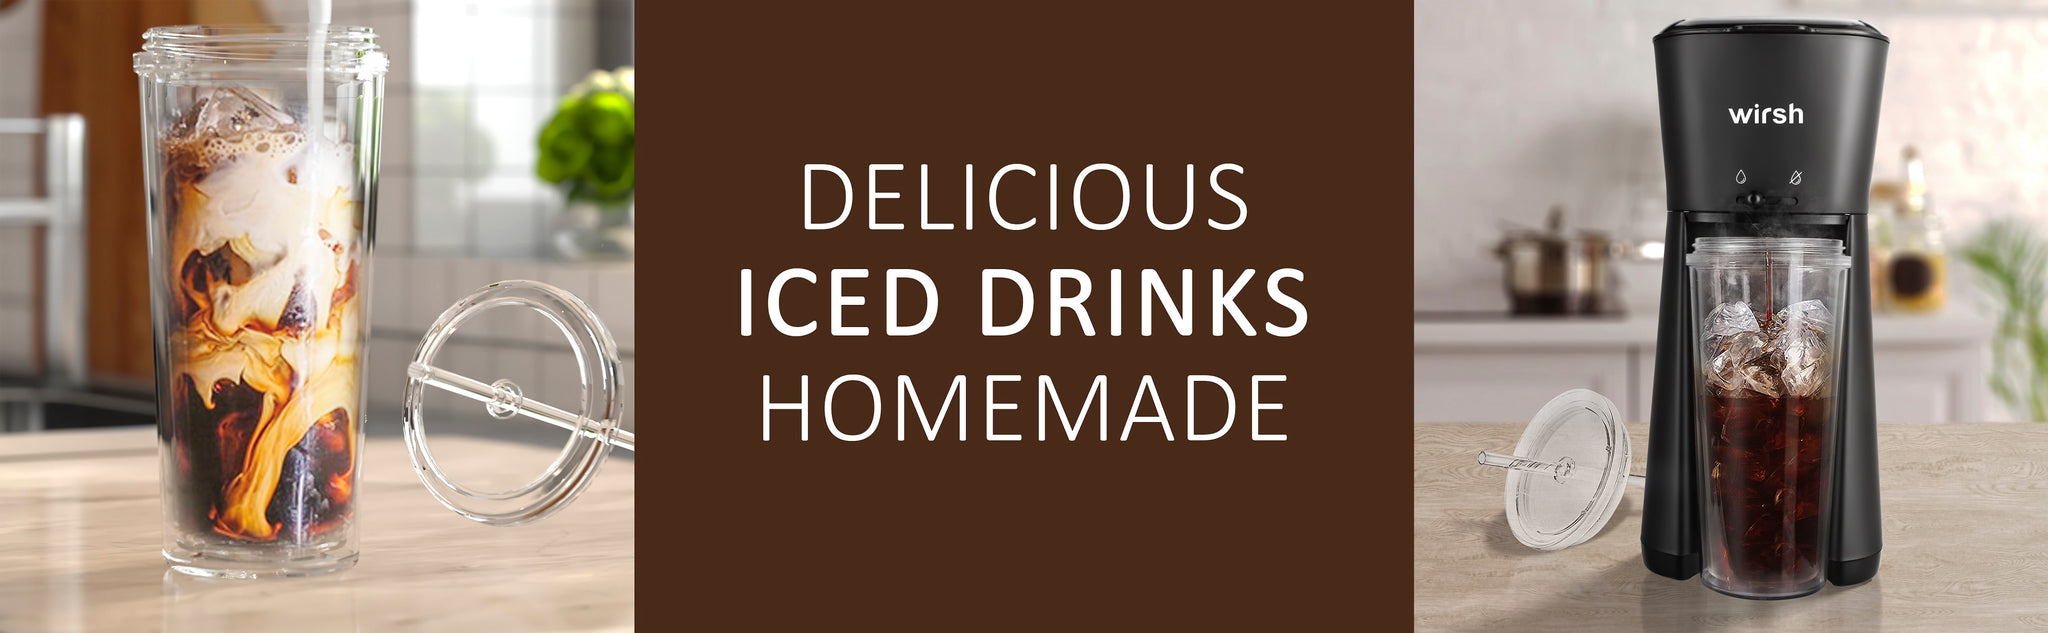 < img src="ice tea coffee maker.jpg" alt="wirsh ice tea coffee maker iecd drinks homemade"/>